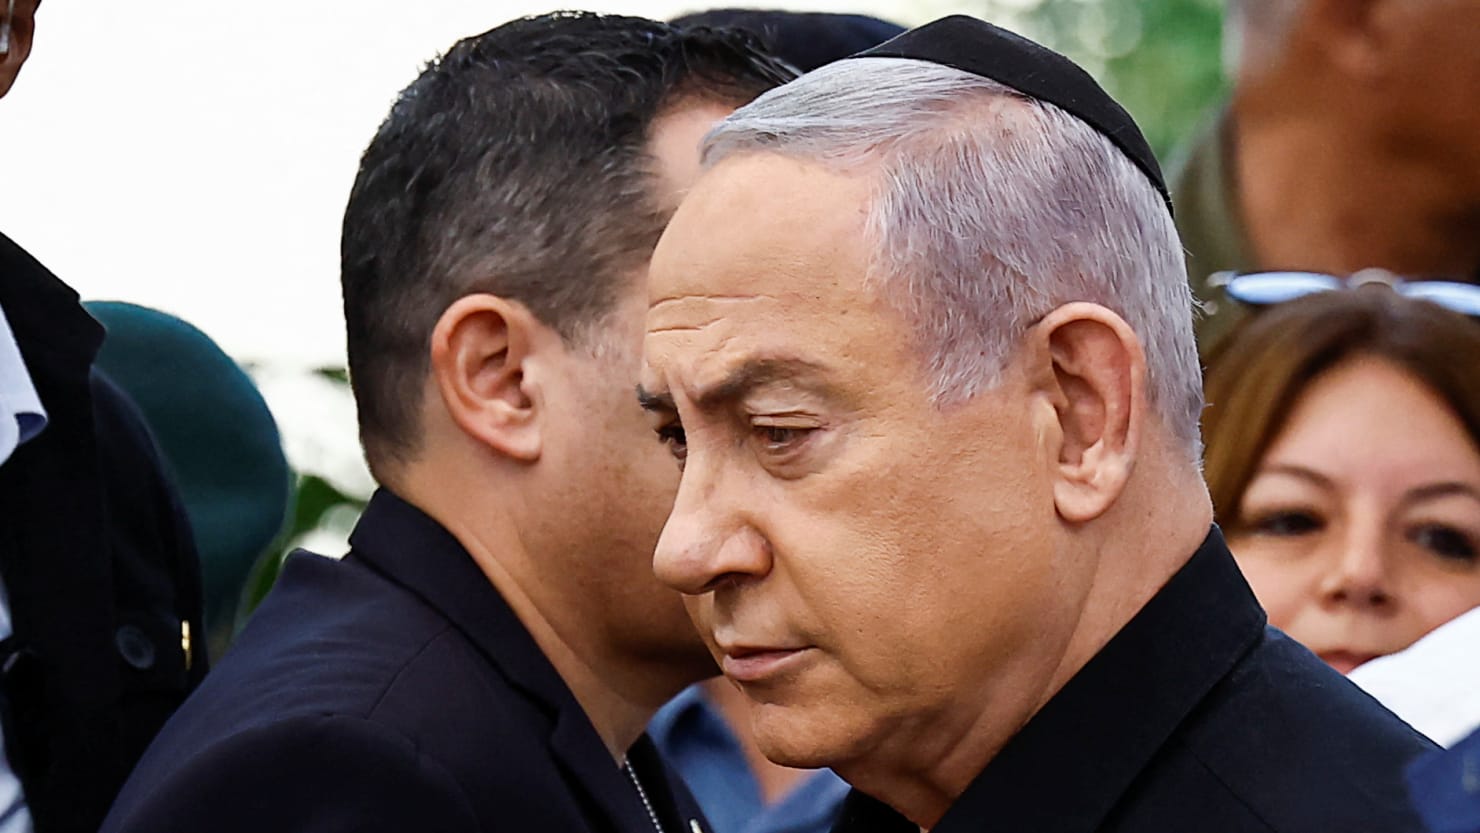 Israeli official Gadi Eisenkot says Benjamin Netanyahu is lying about the war in Gaza